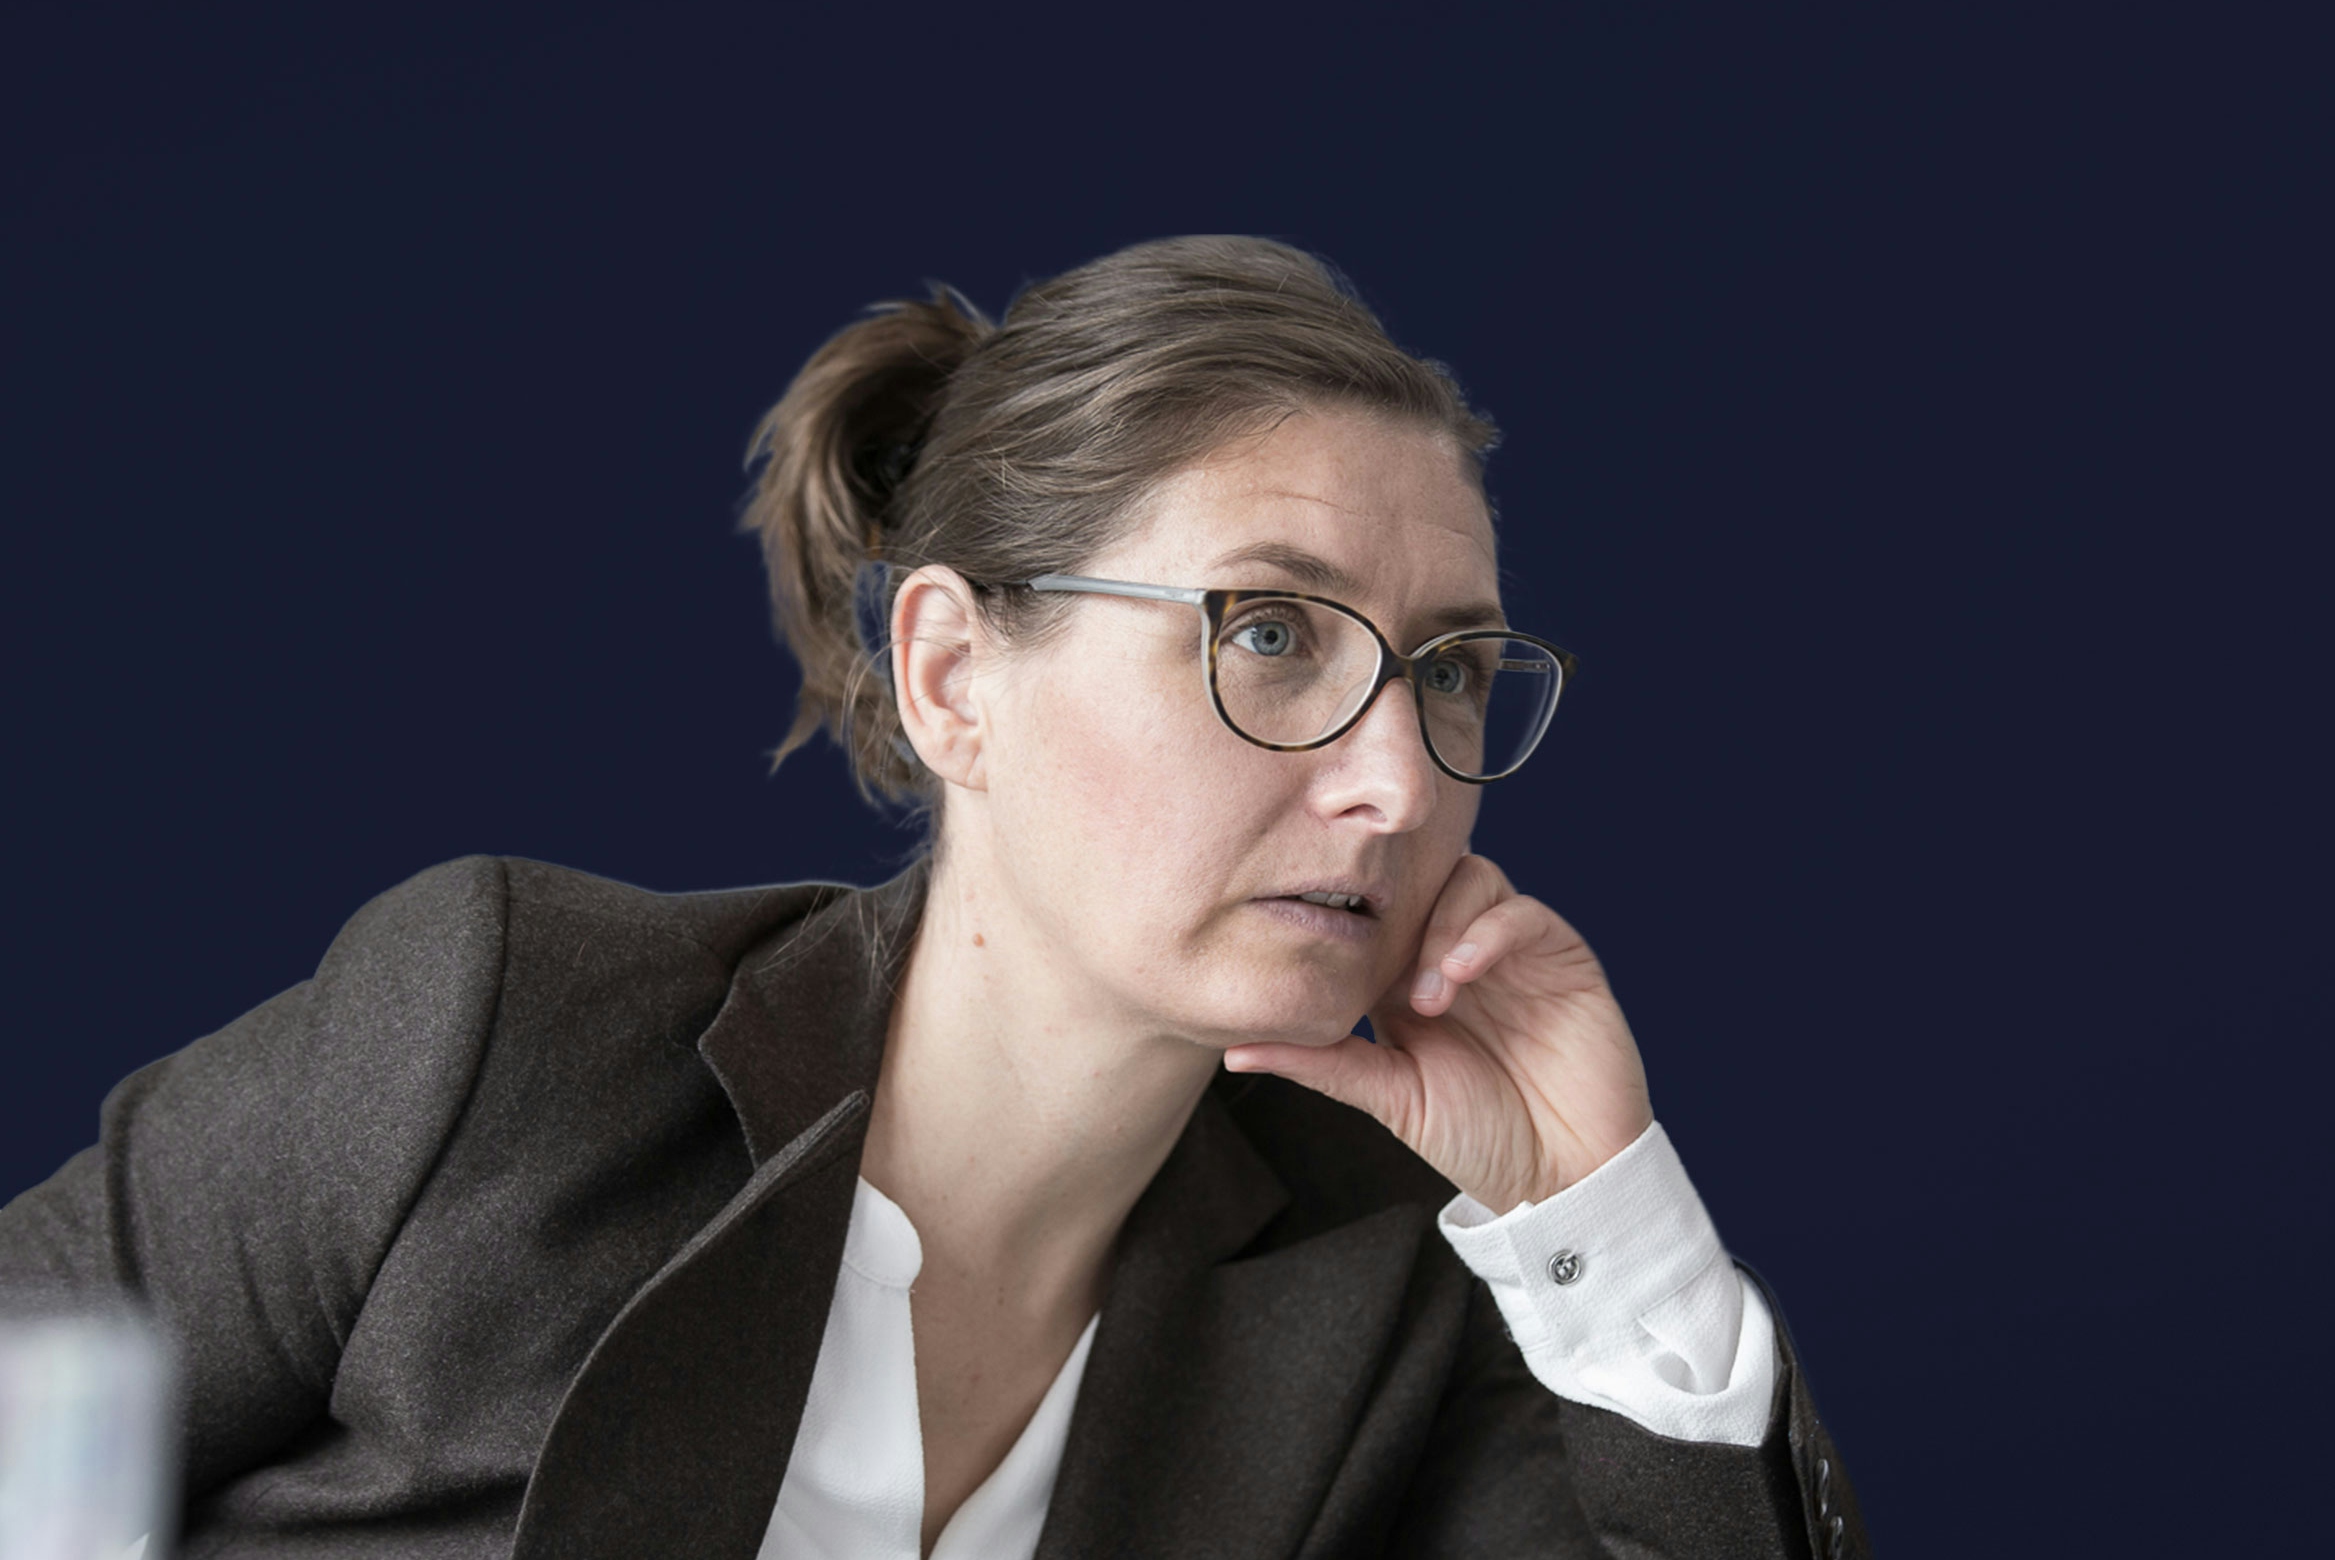 Claudia Arndt from Klinikum Karlsruhe with brown blazer and glasses